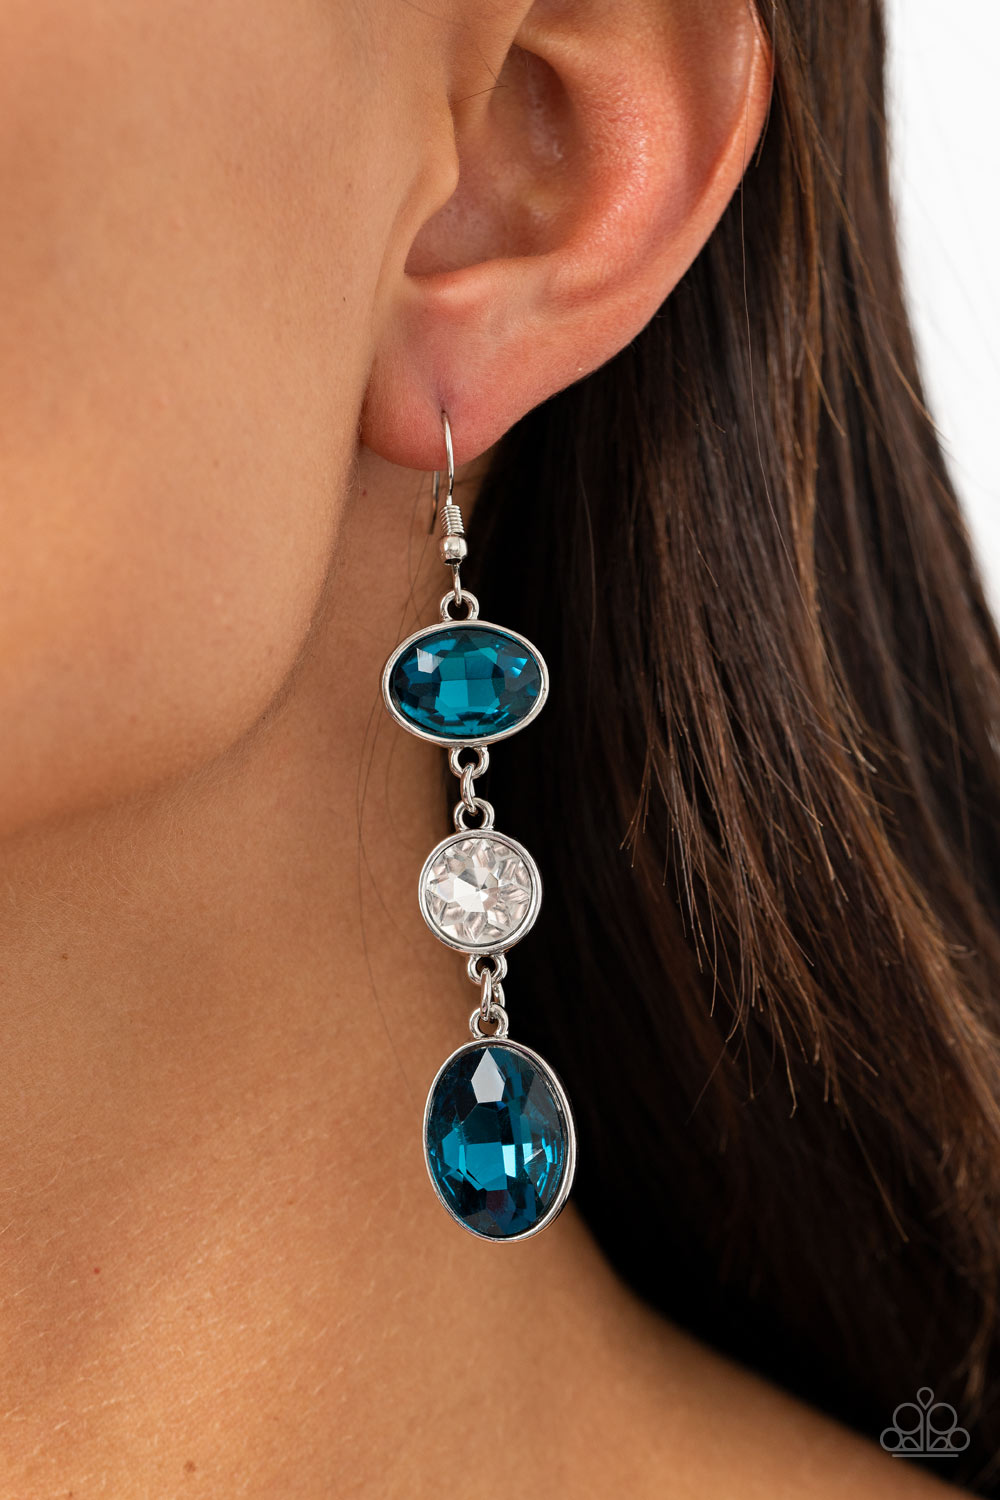 Silver Dangle earrings - Paparazzi The GLOW Must Go On! - Blue Earrings Paparazzi jewelry image